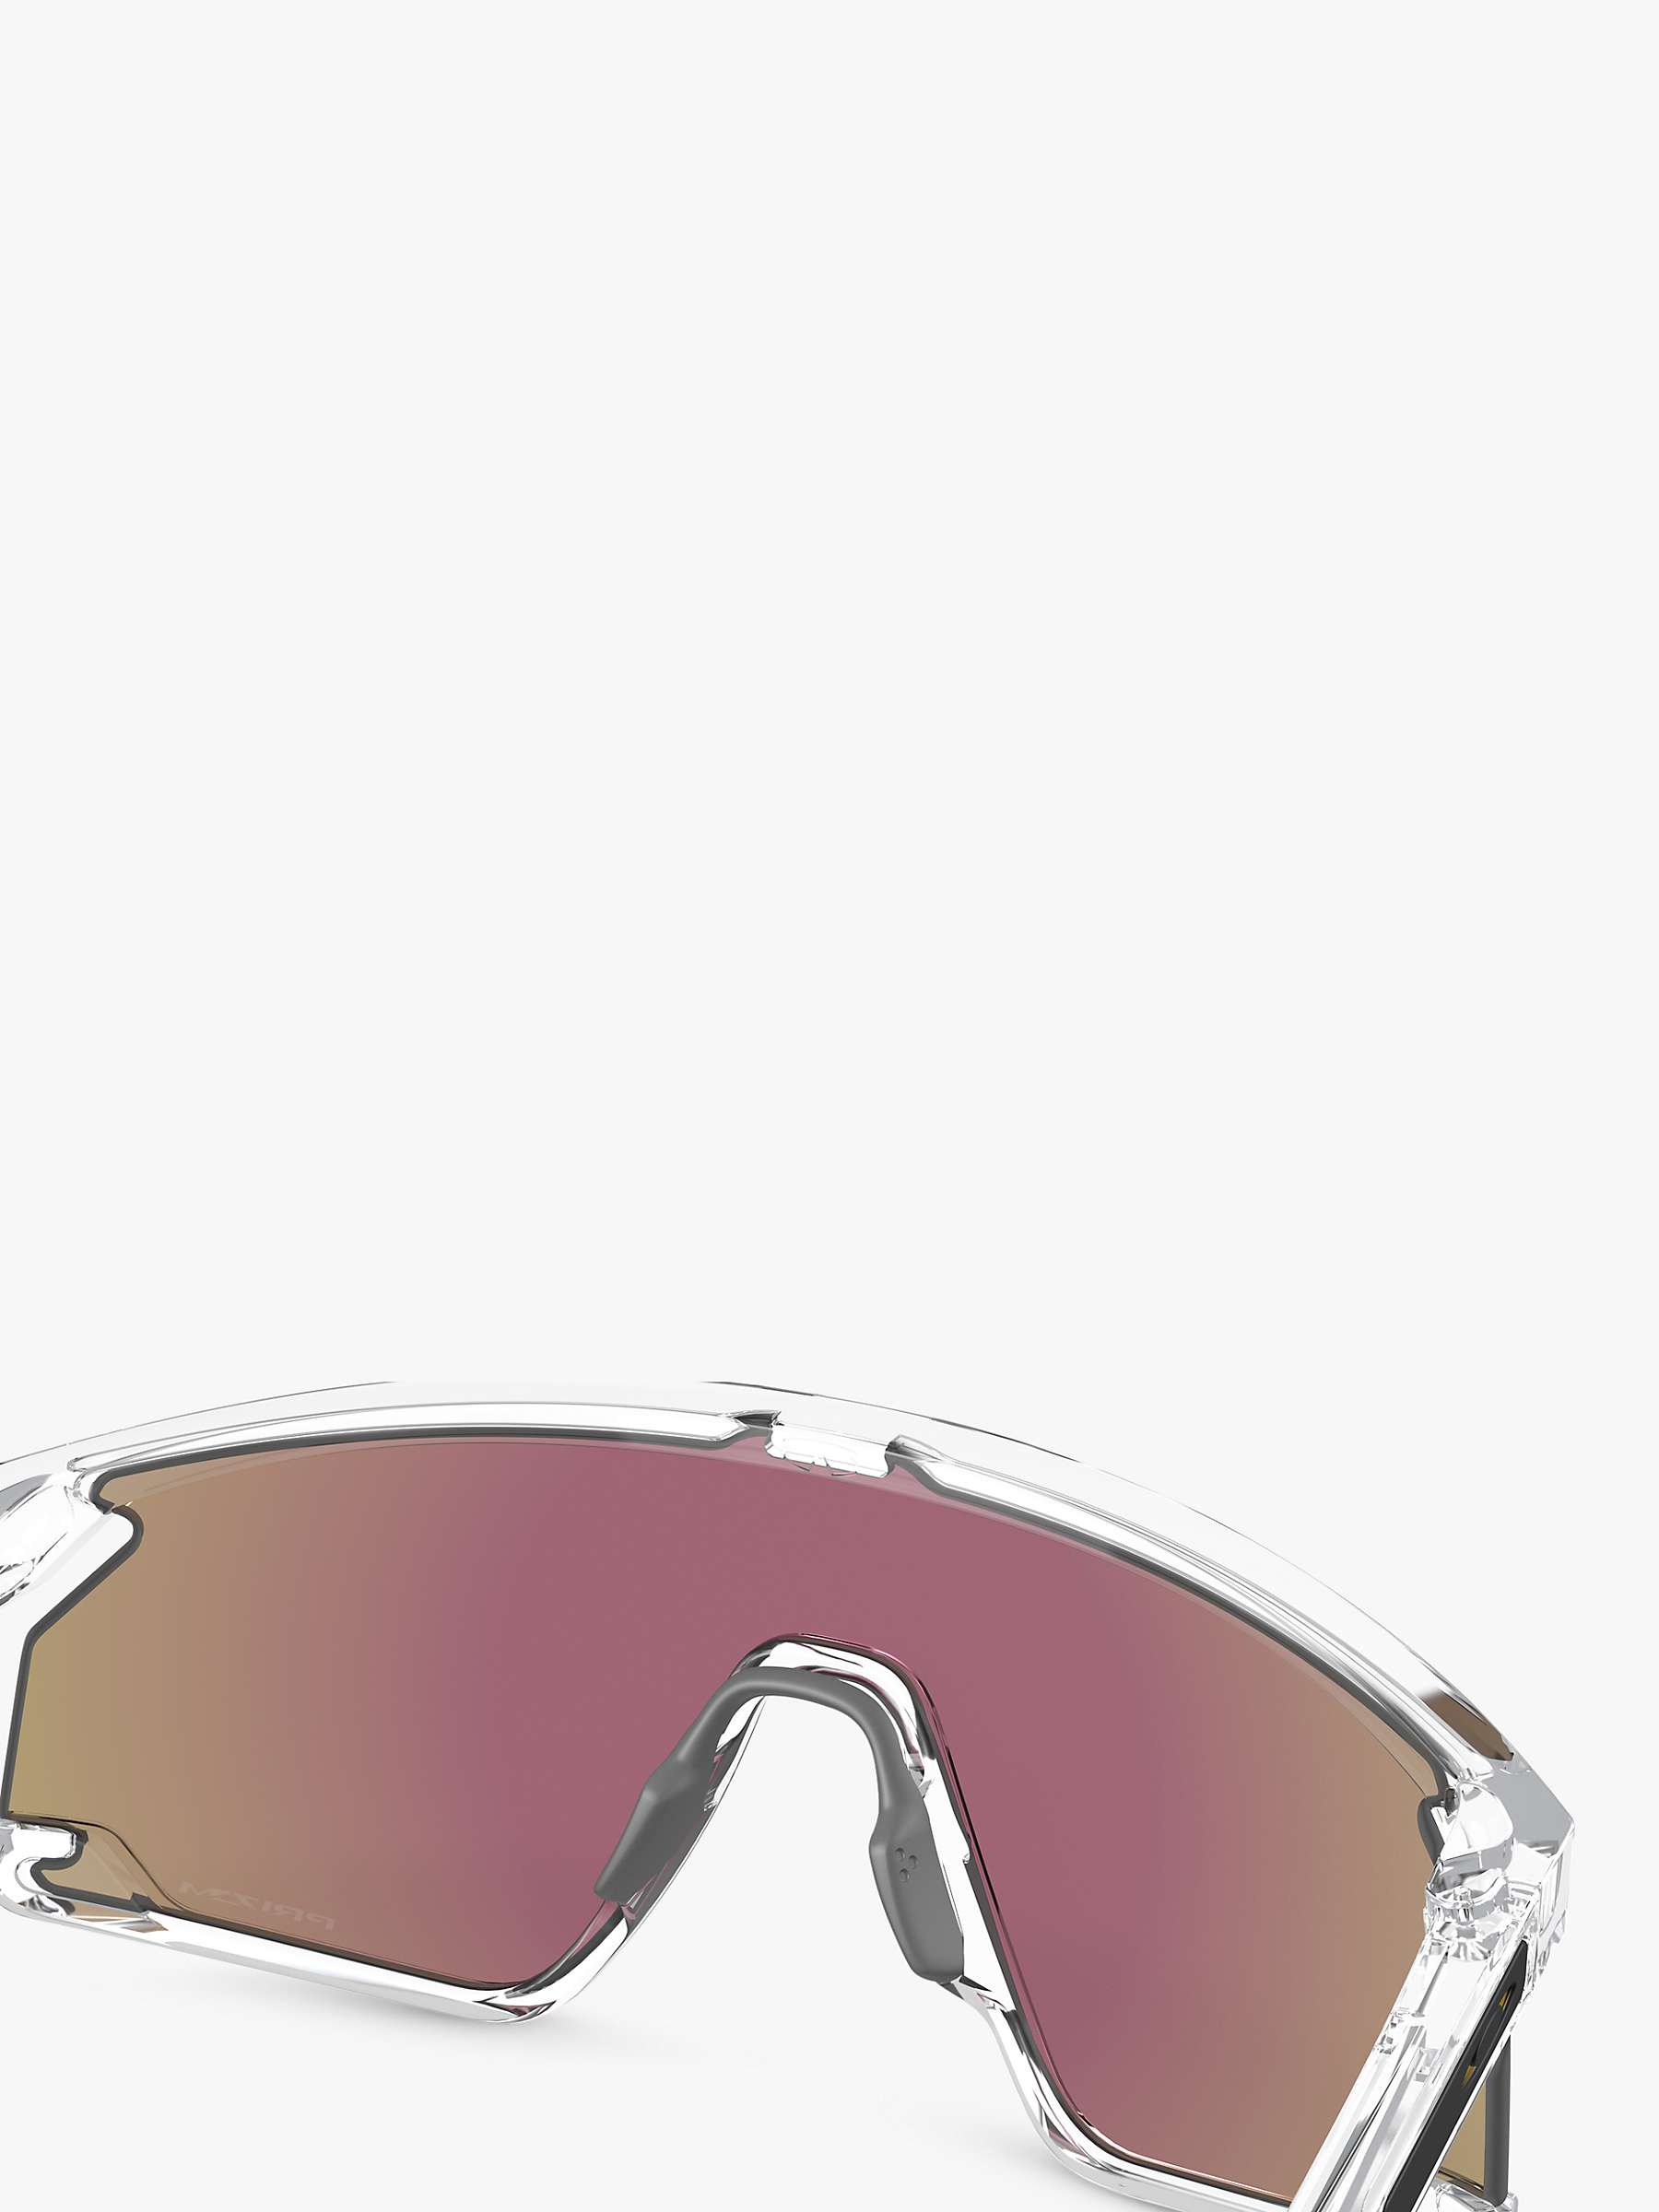 Buy Oakley OO9280 Unisex Wrap Sunglasses, Clear/Mirror Blue Online at johnlewis.com